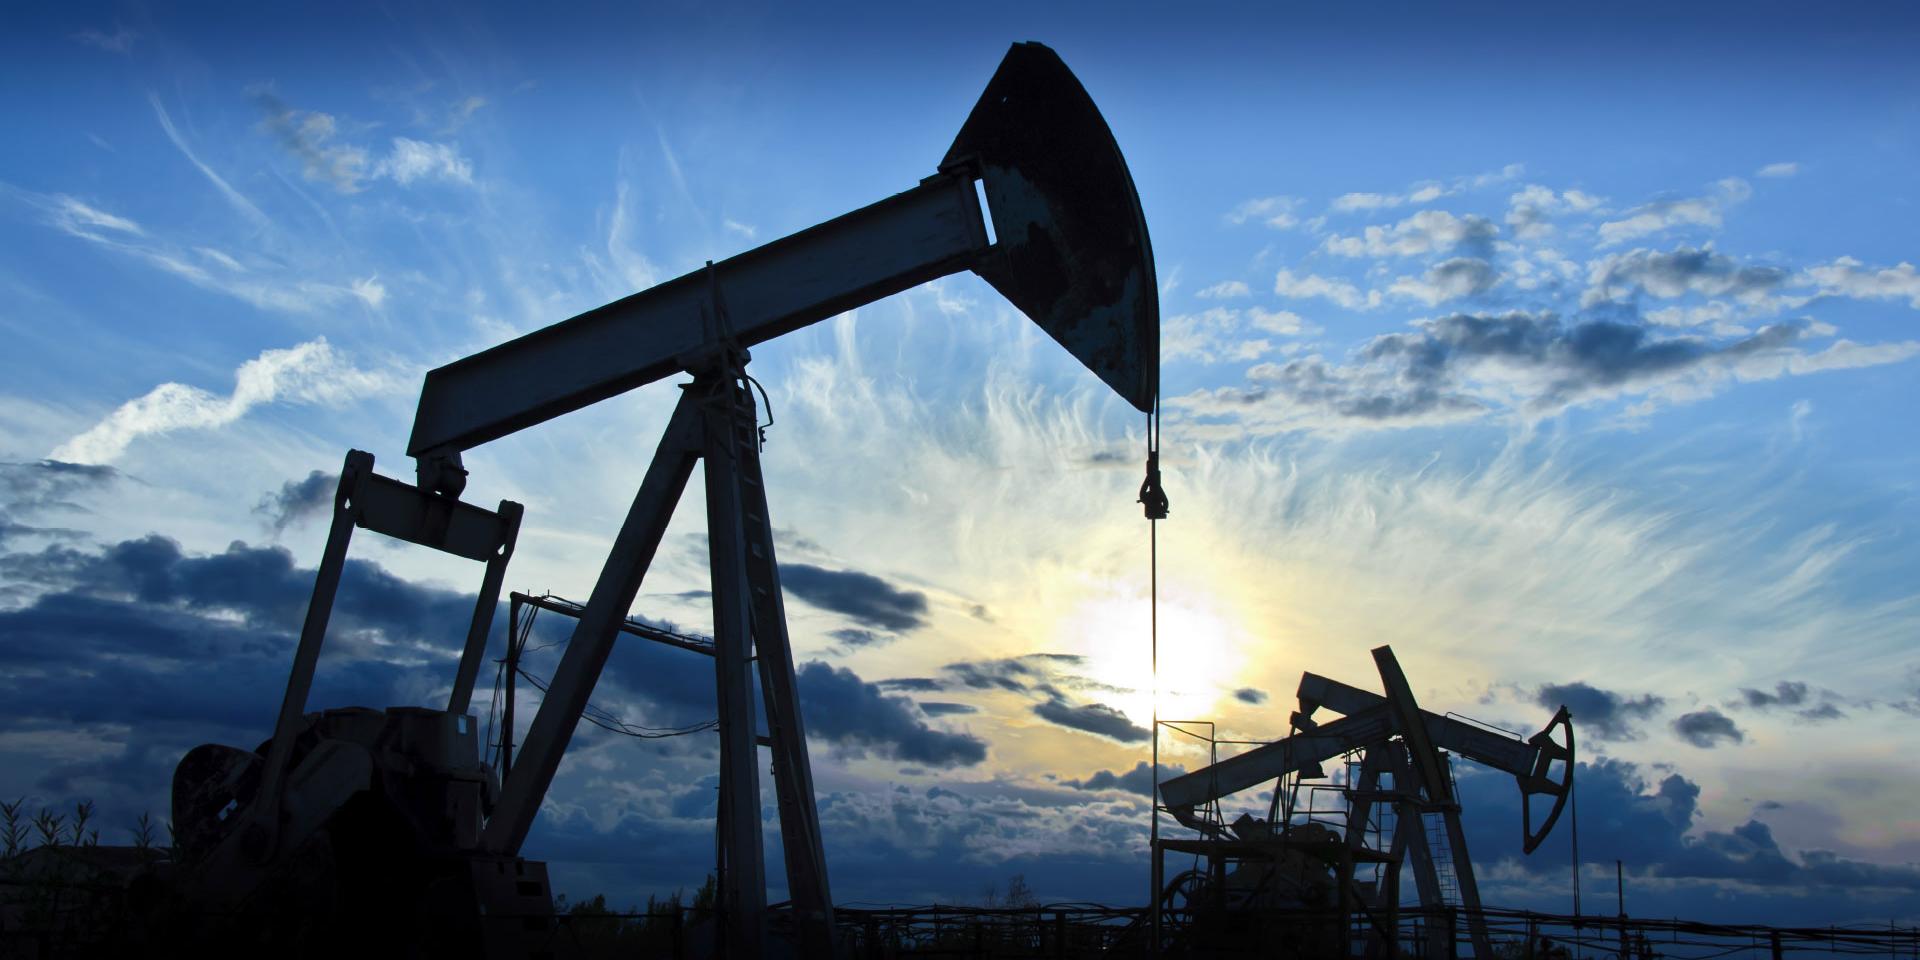 "Urals ушла в минус", - СМИ пояснили парадокс ситуации на рынке нефти в России